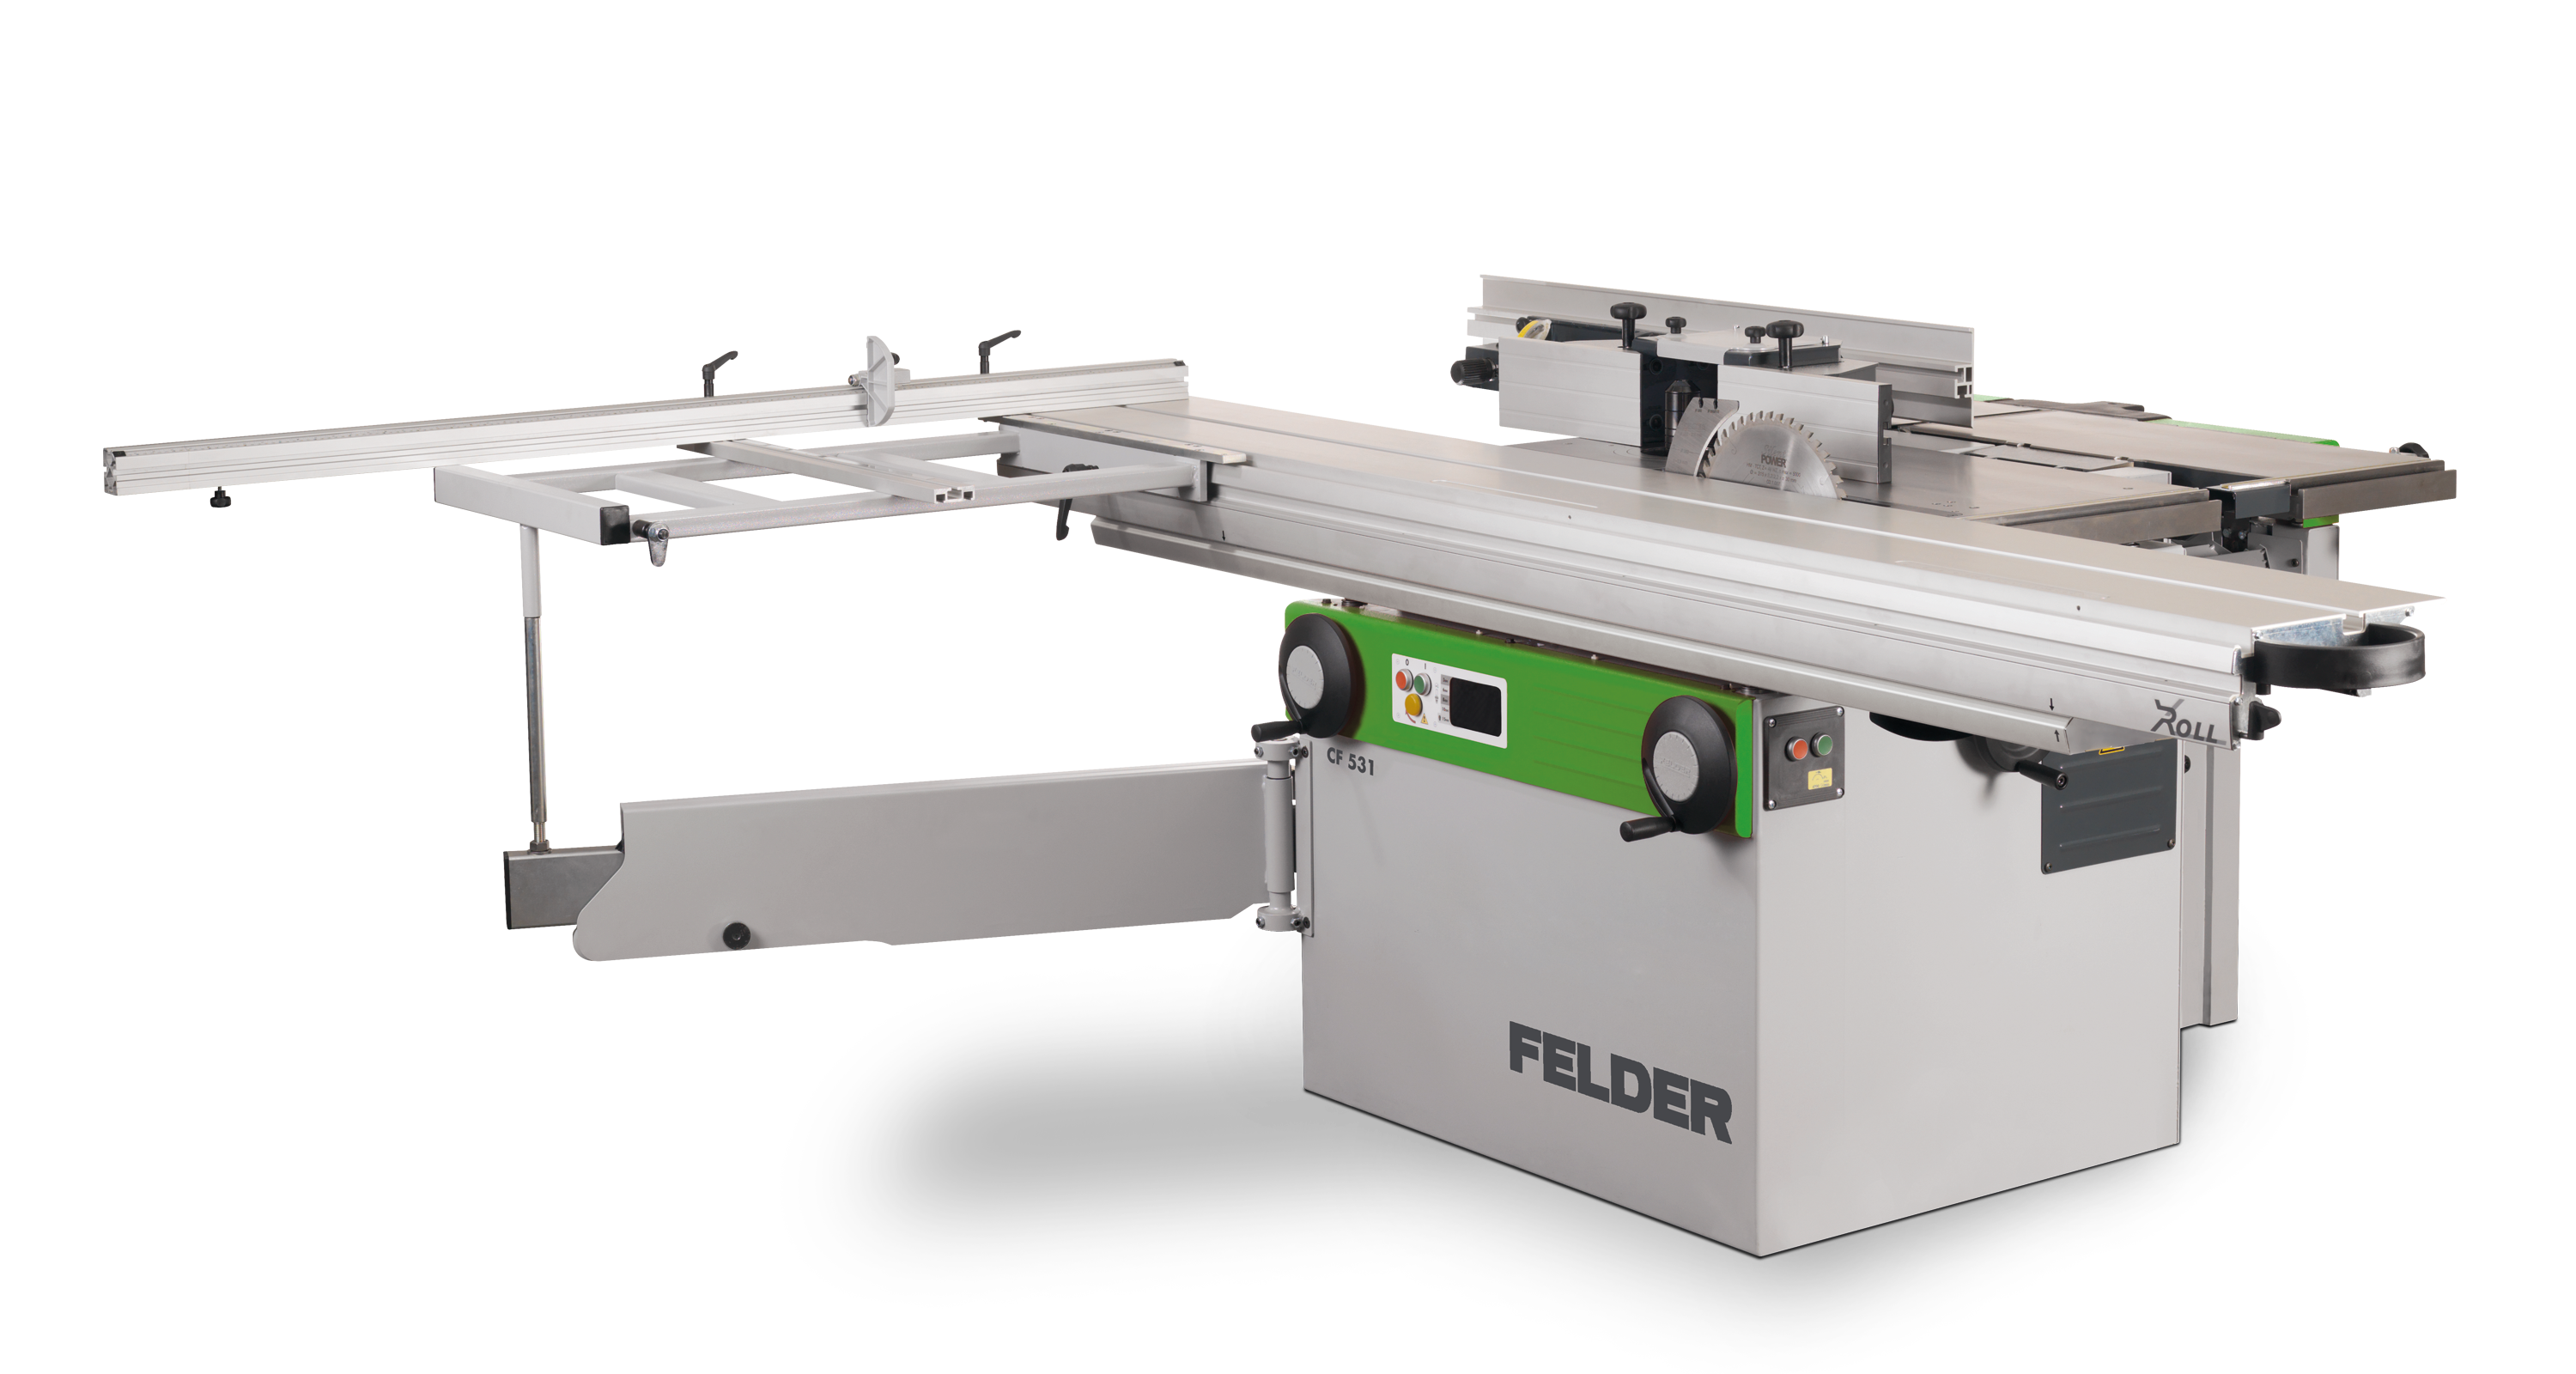 Combination Machine Cf 531 Felder